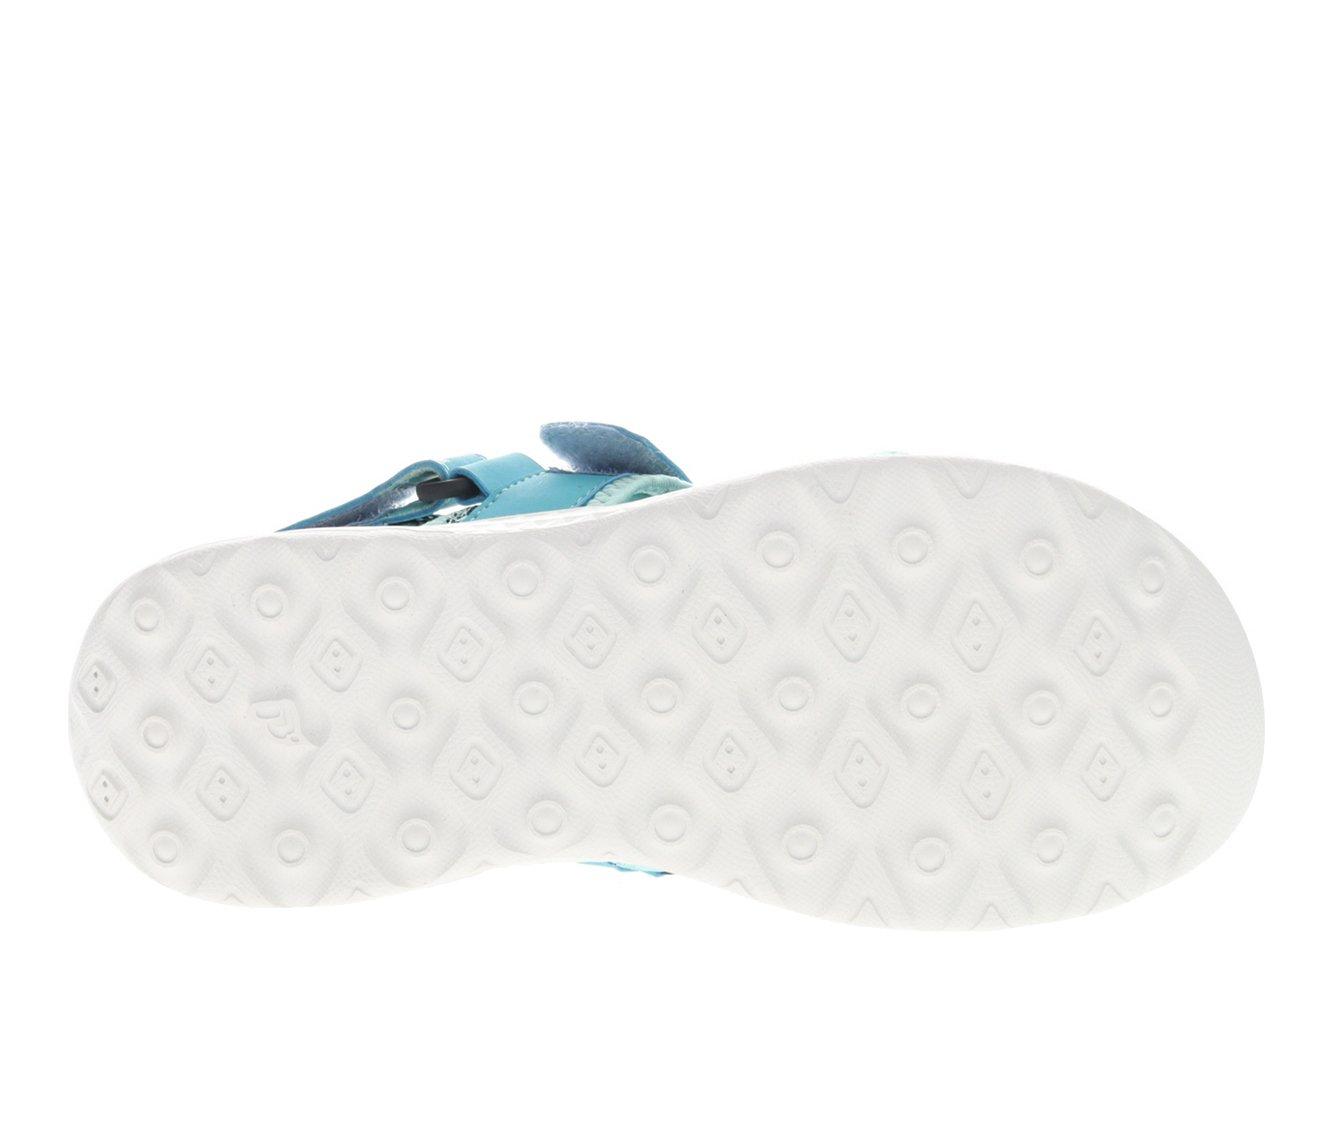 Women's Propet TravelActiv Sport Water-Ready Sandals